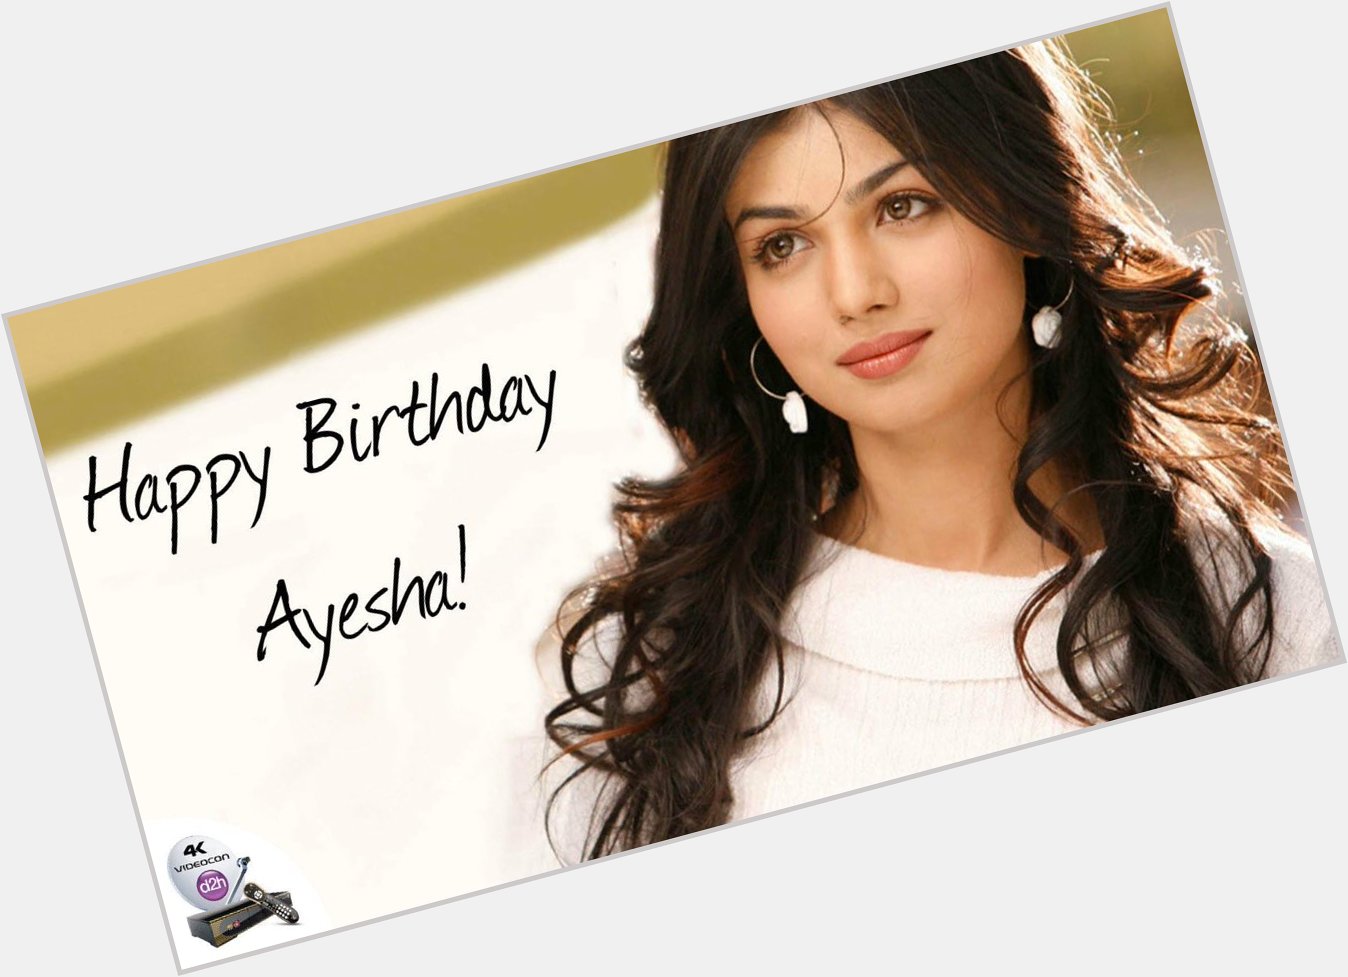 Happy Birthday Ayesha Takia!
Join us in wishing the gorgeous actress a wonderful year ahead. 